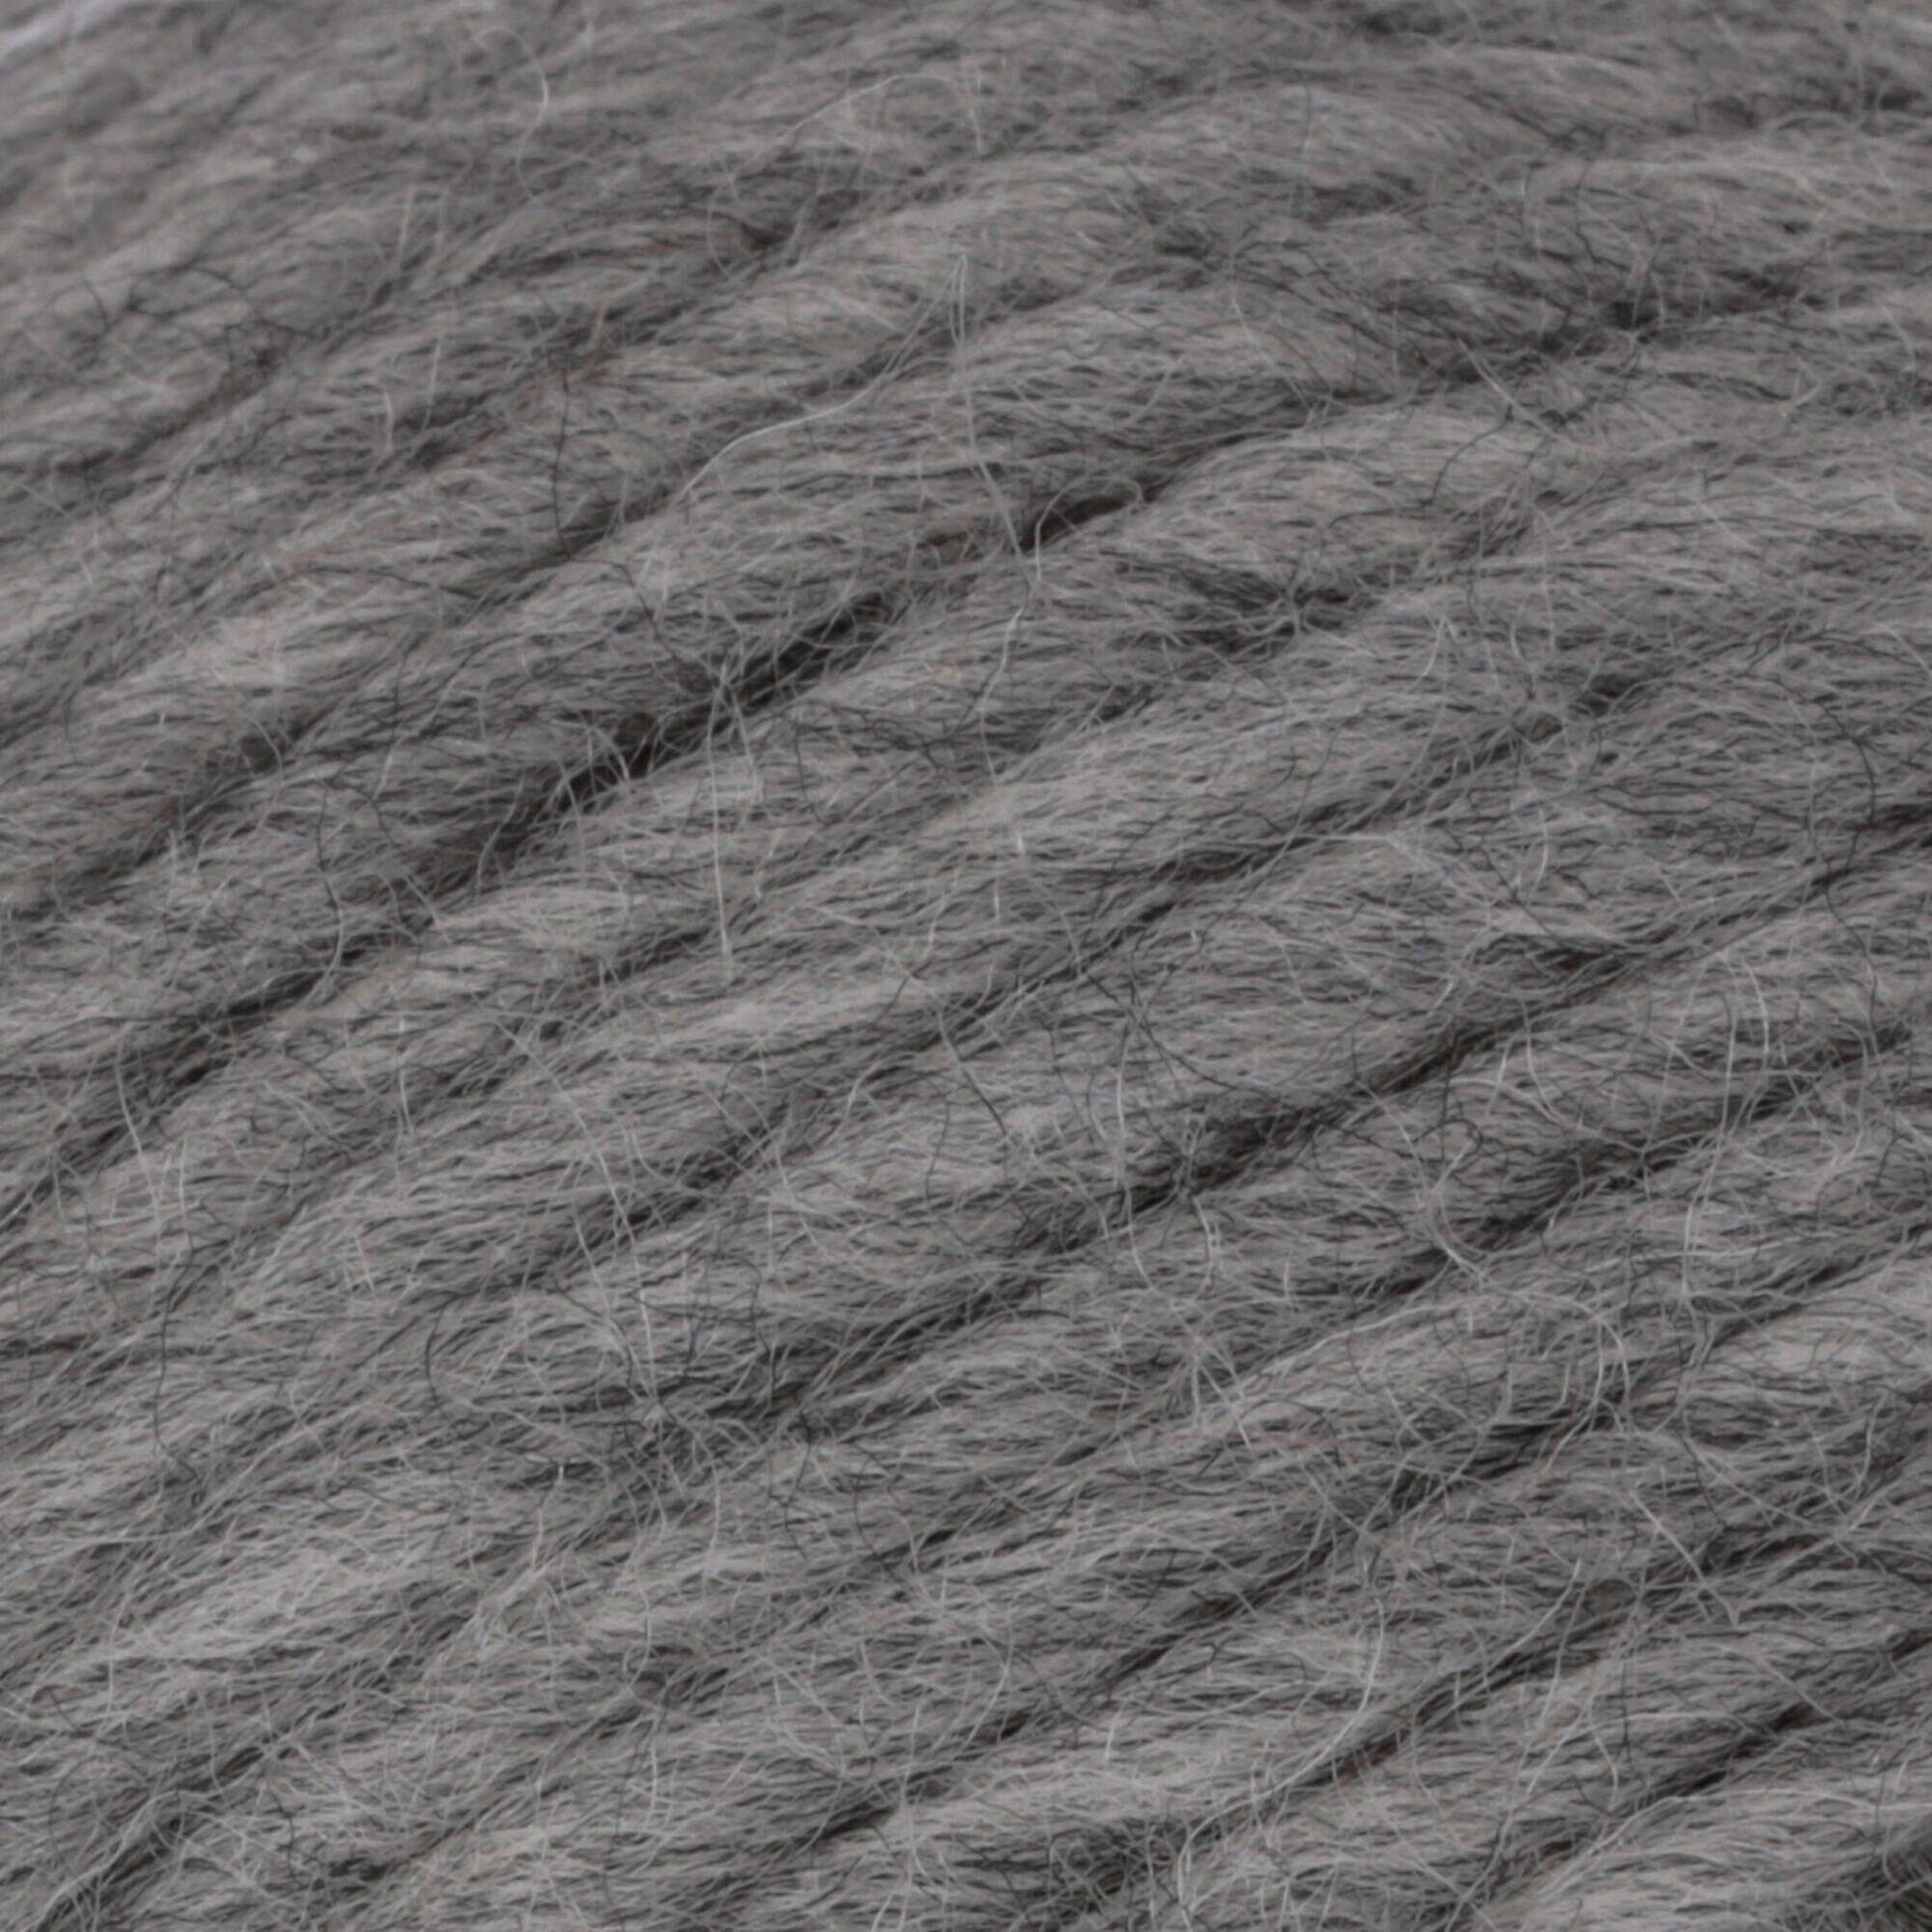 Patons Classic Wool Roving Yarn Gray